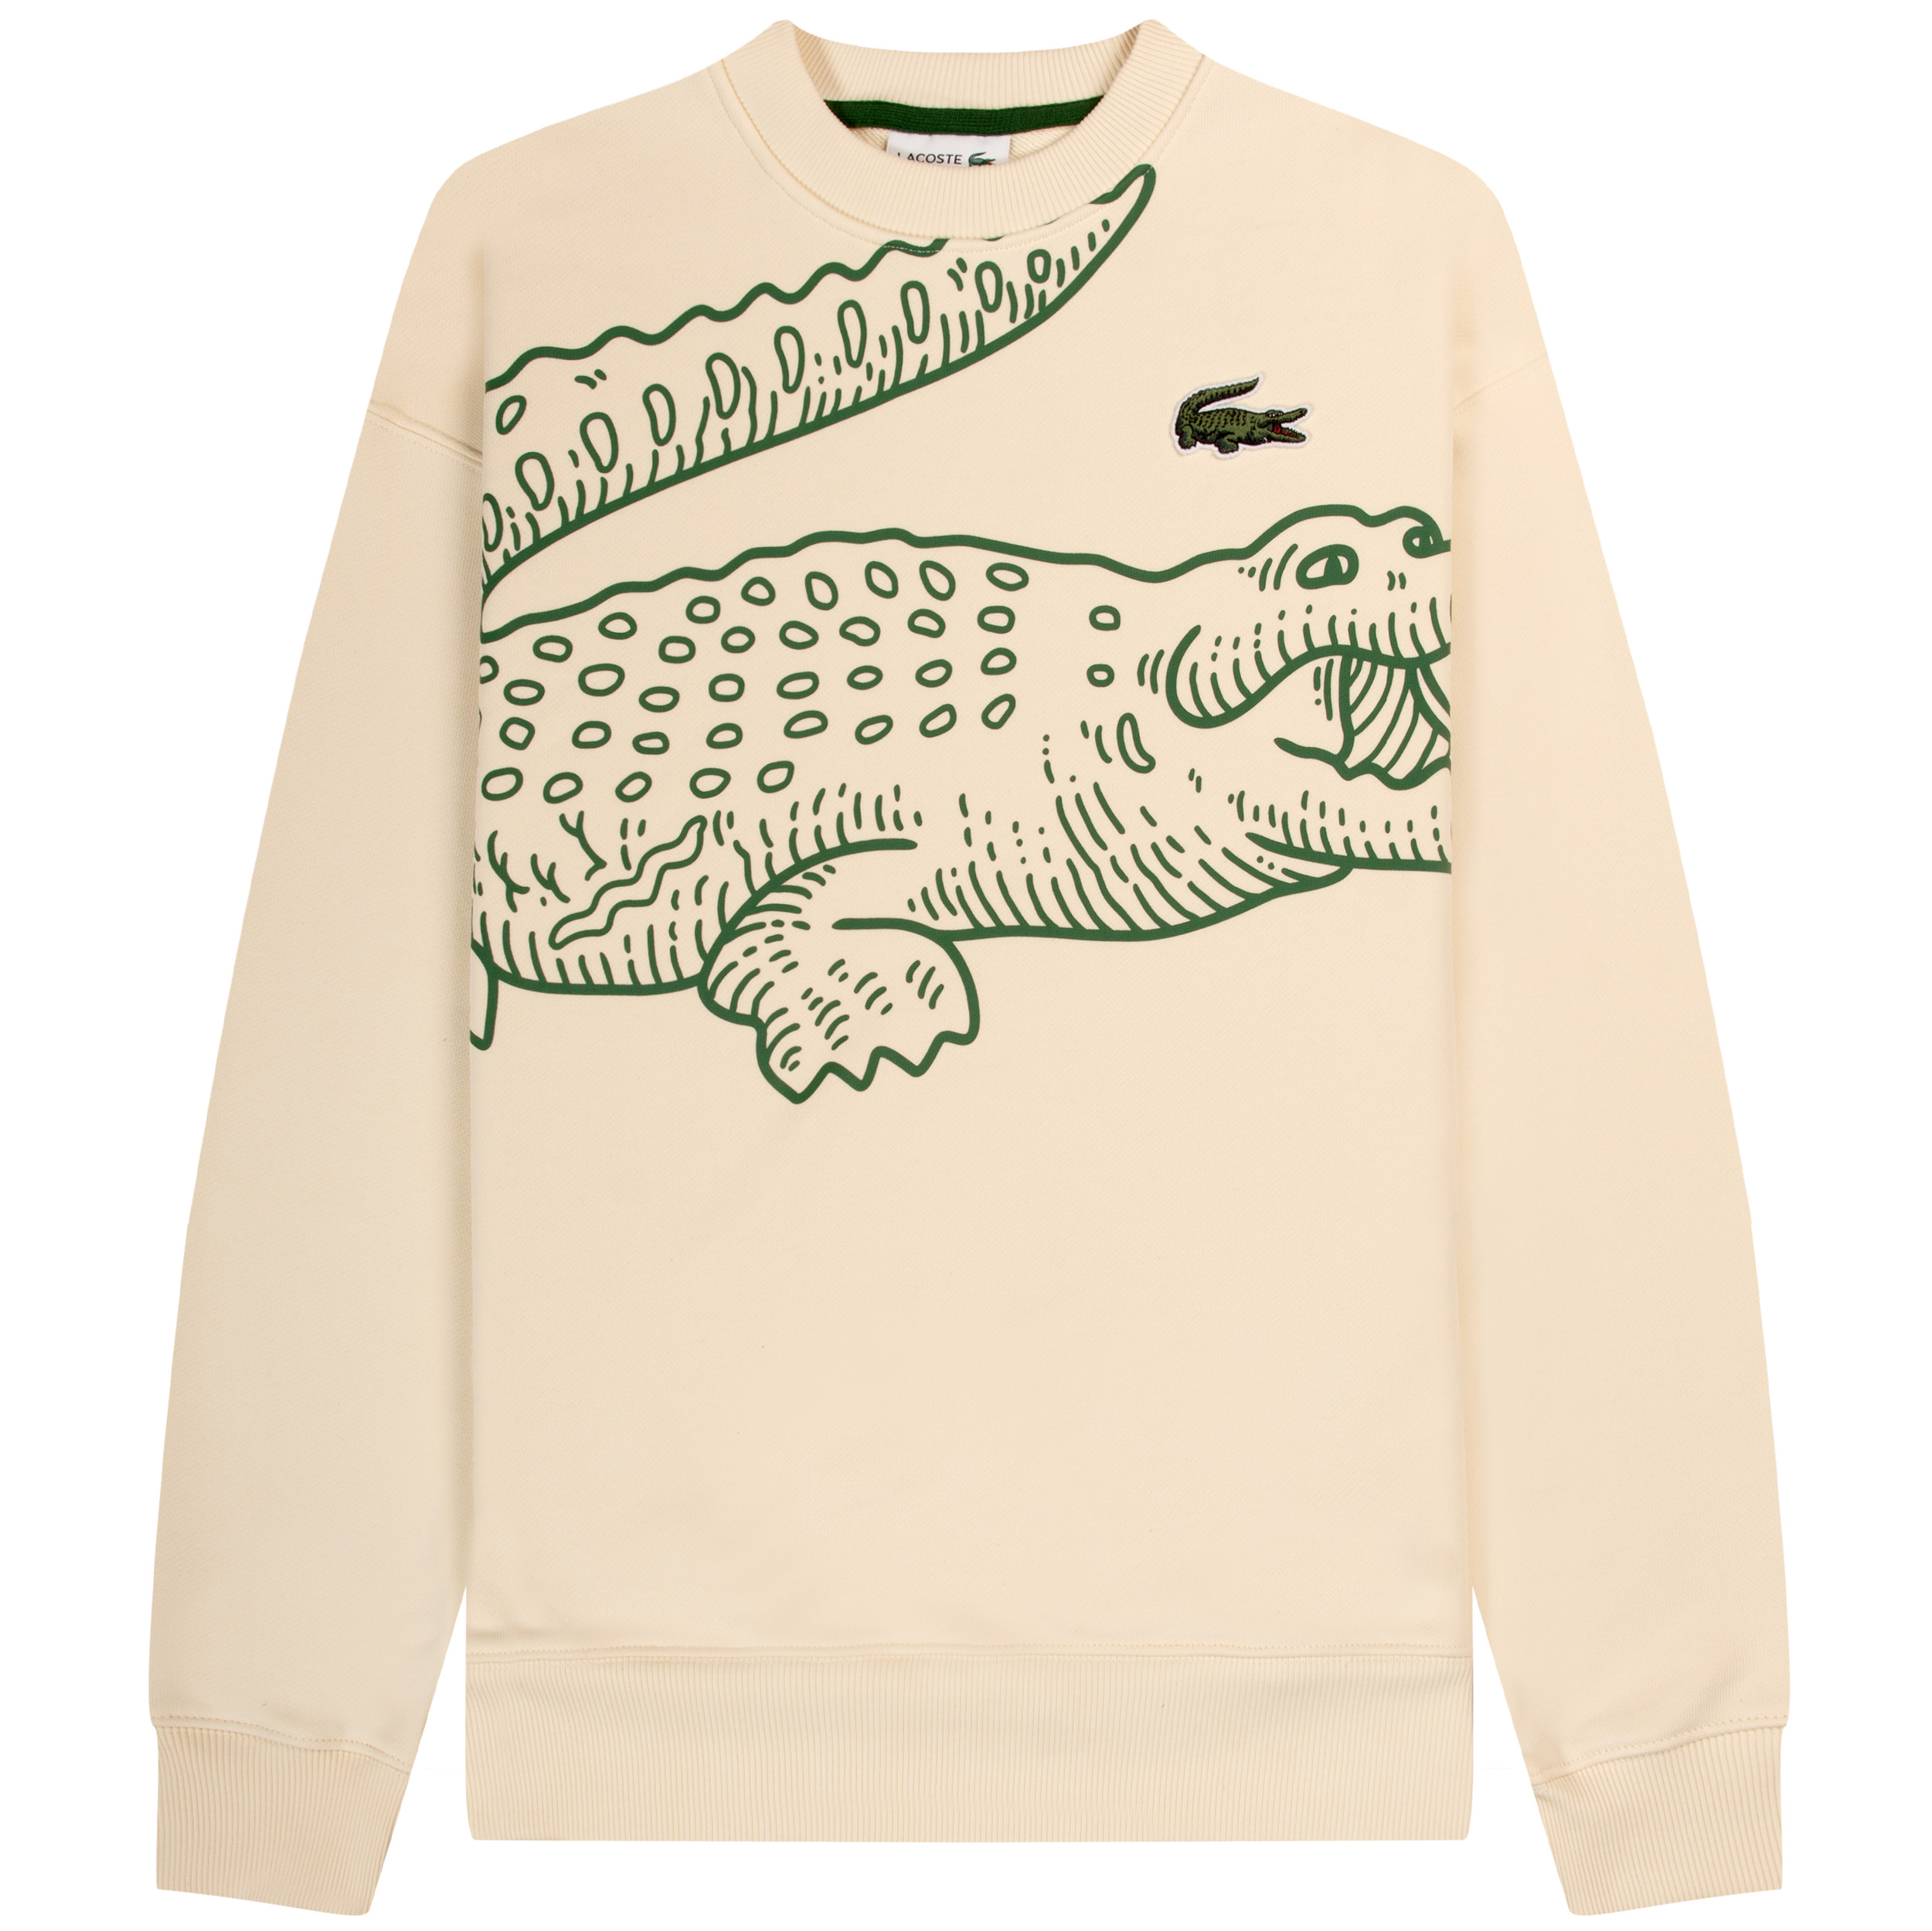 Lacoste Large Croc Print Crewneck Sweatshirt Lapland